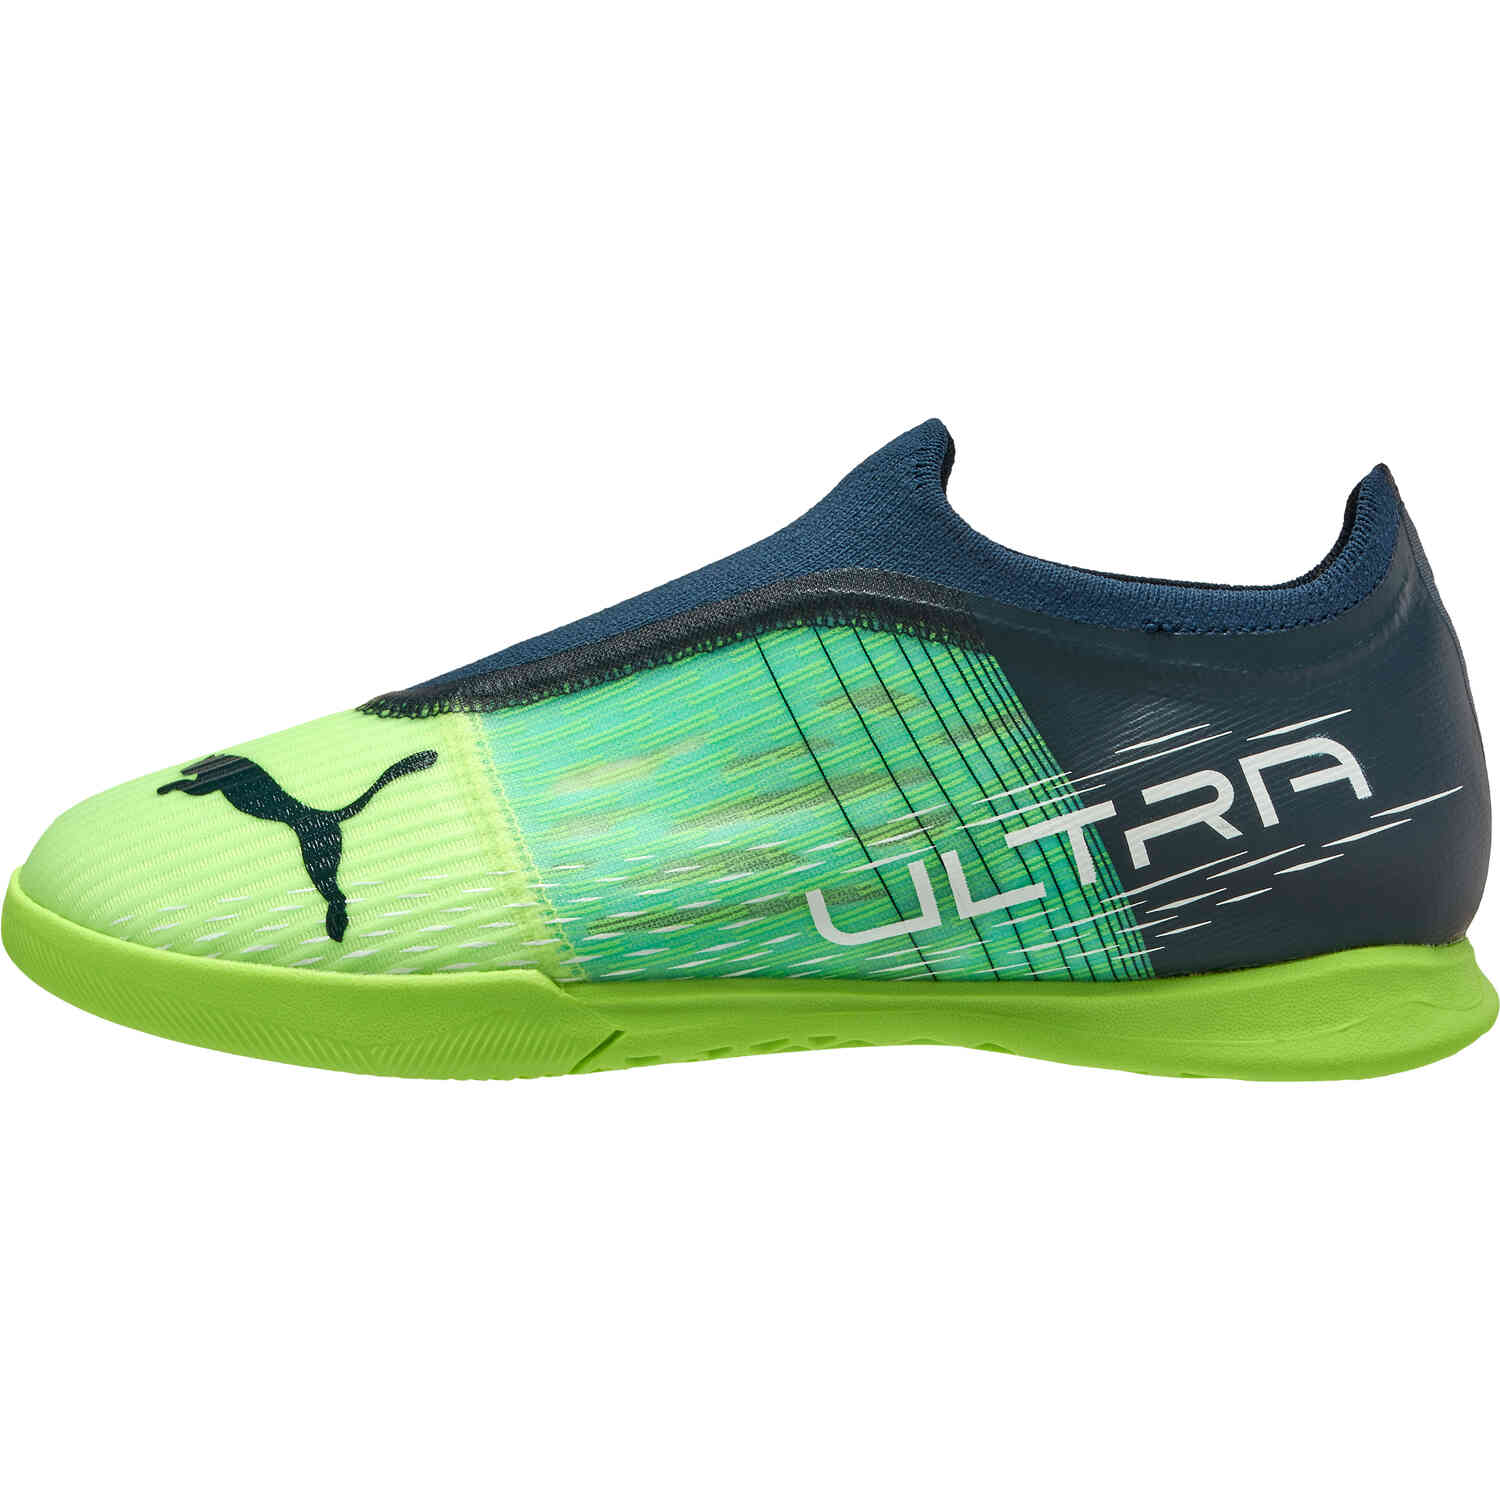 Kids PUMA ULTRA 3.3 Soccer Shoes - Under The Lights - Master